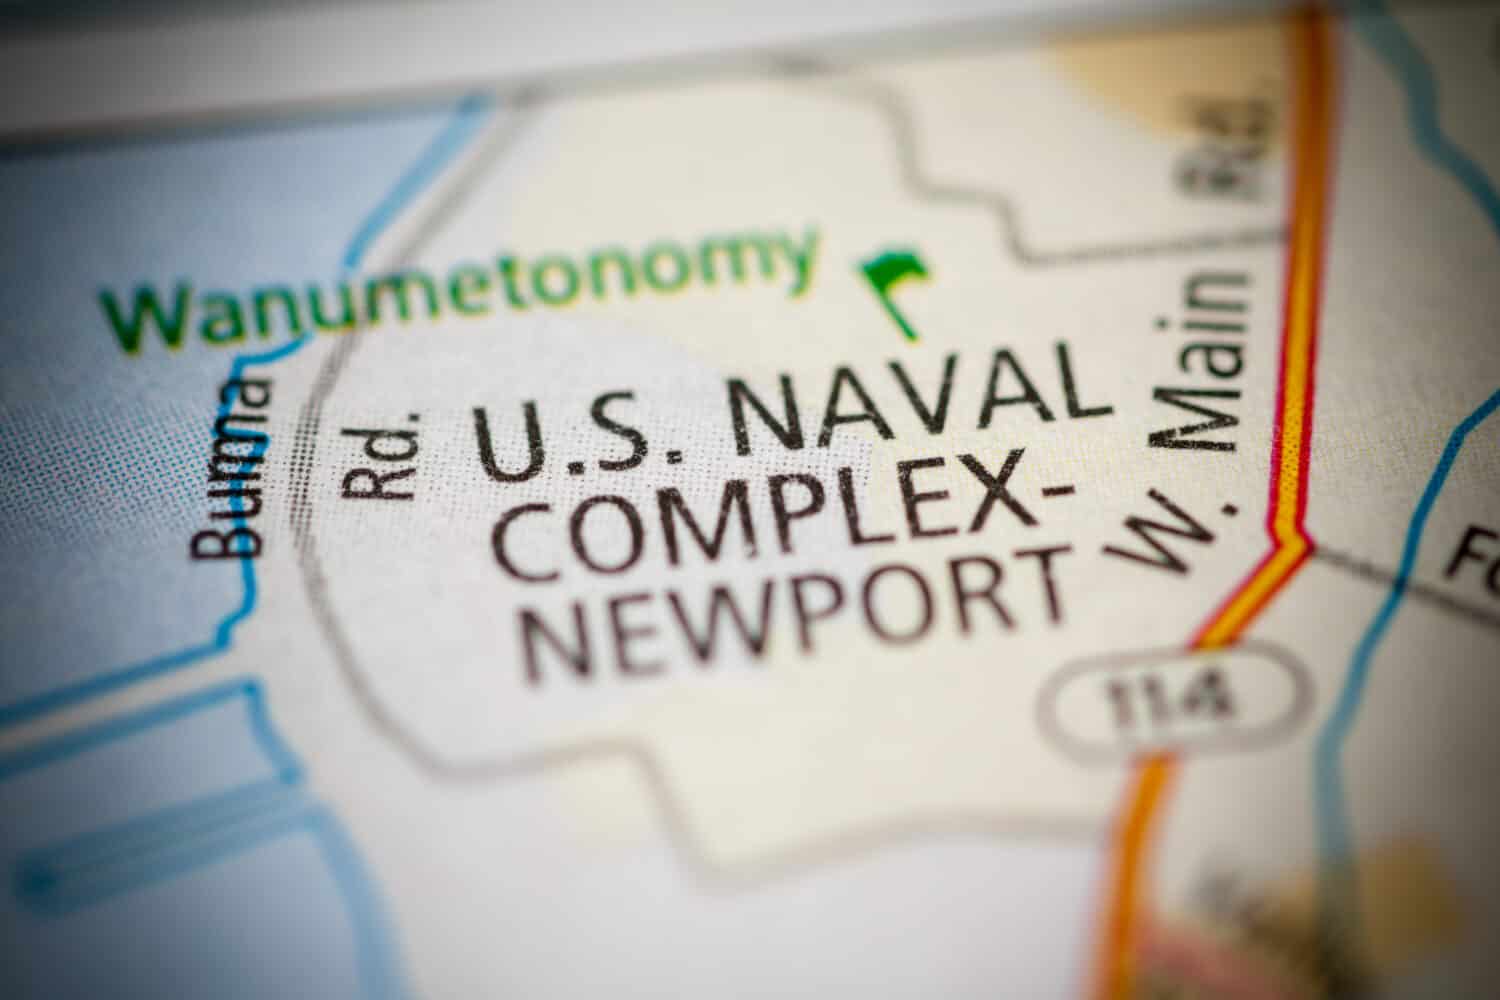 US Naval Complex Newport. Rhode Island. USA